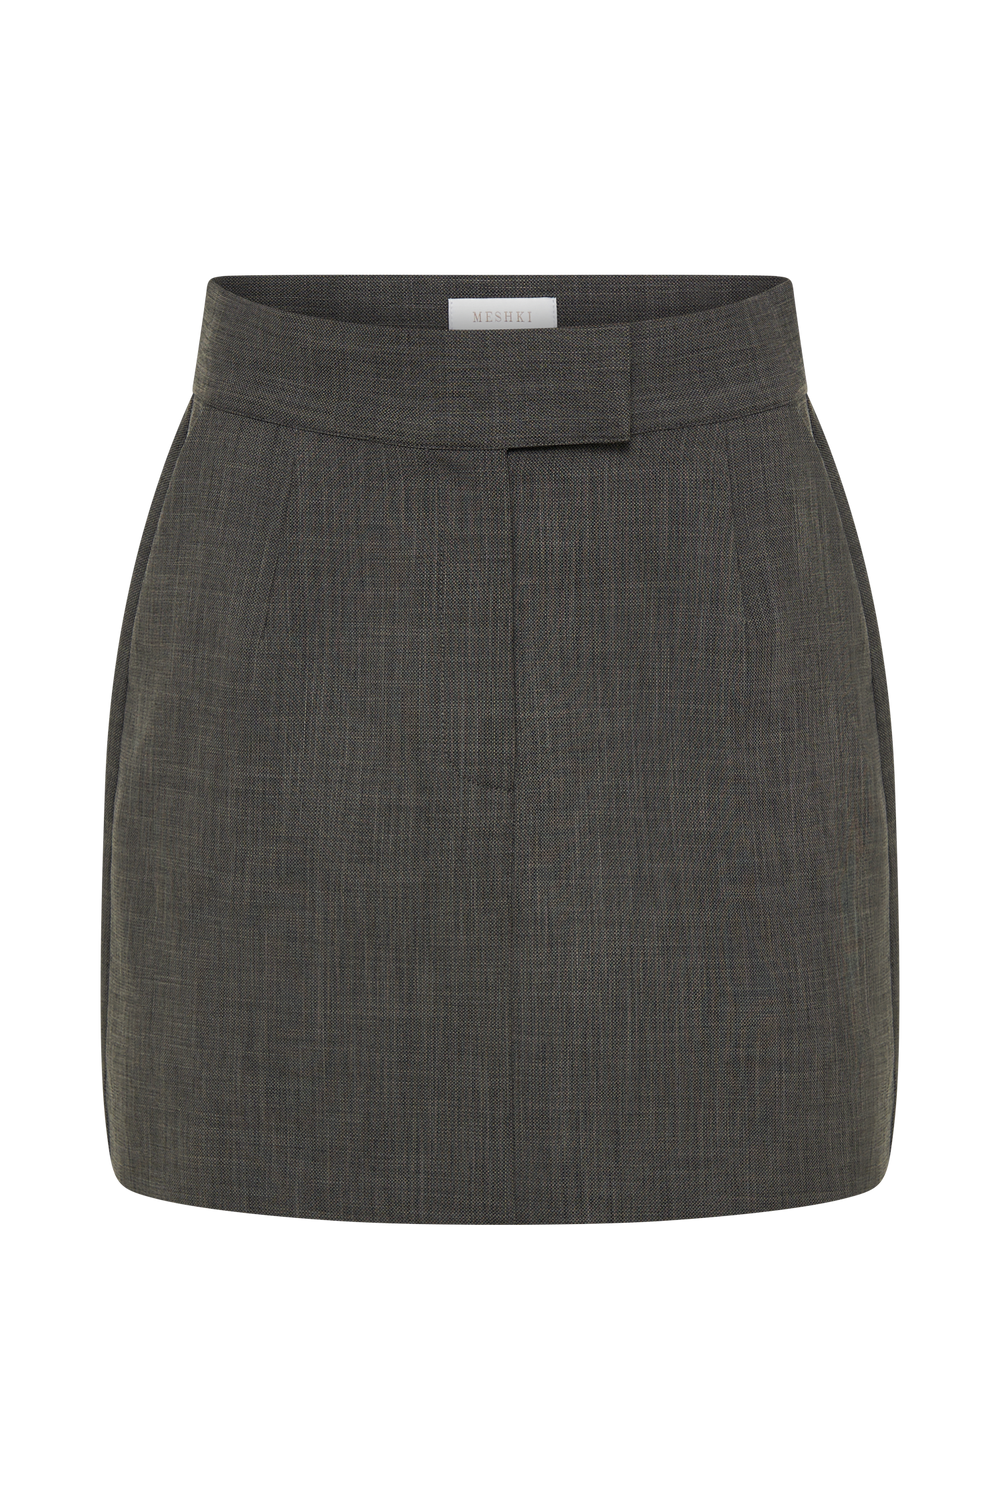 Sayer Textured Mini Skirt - Charcoal